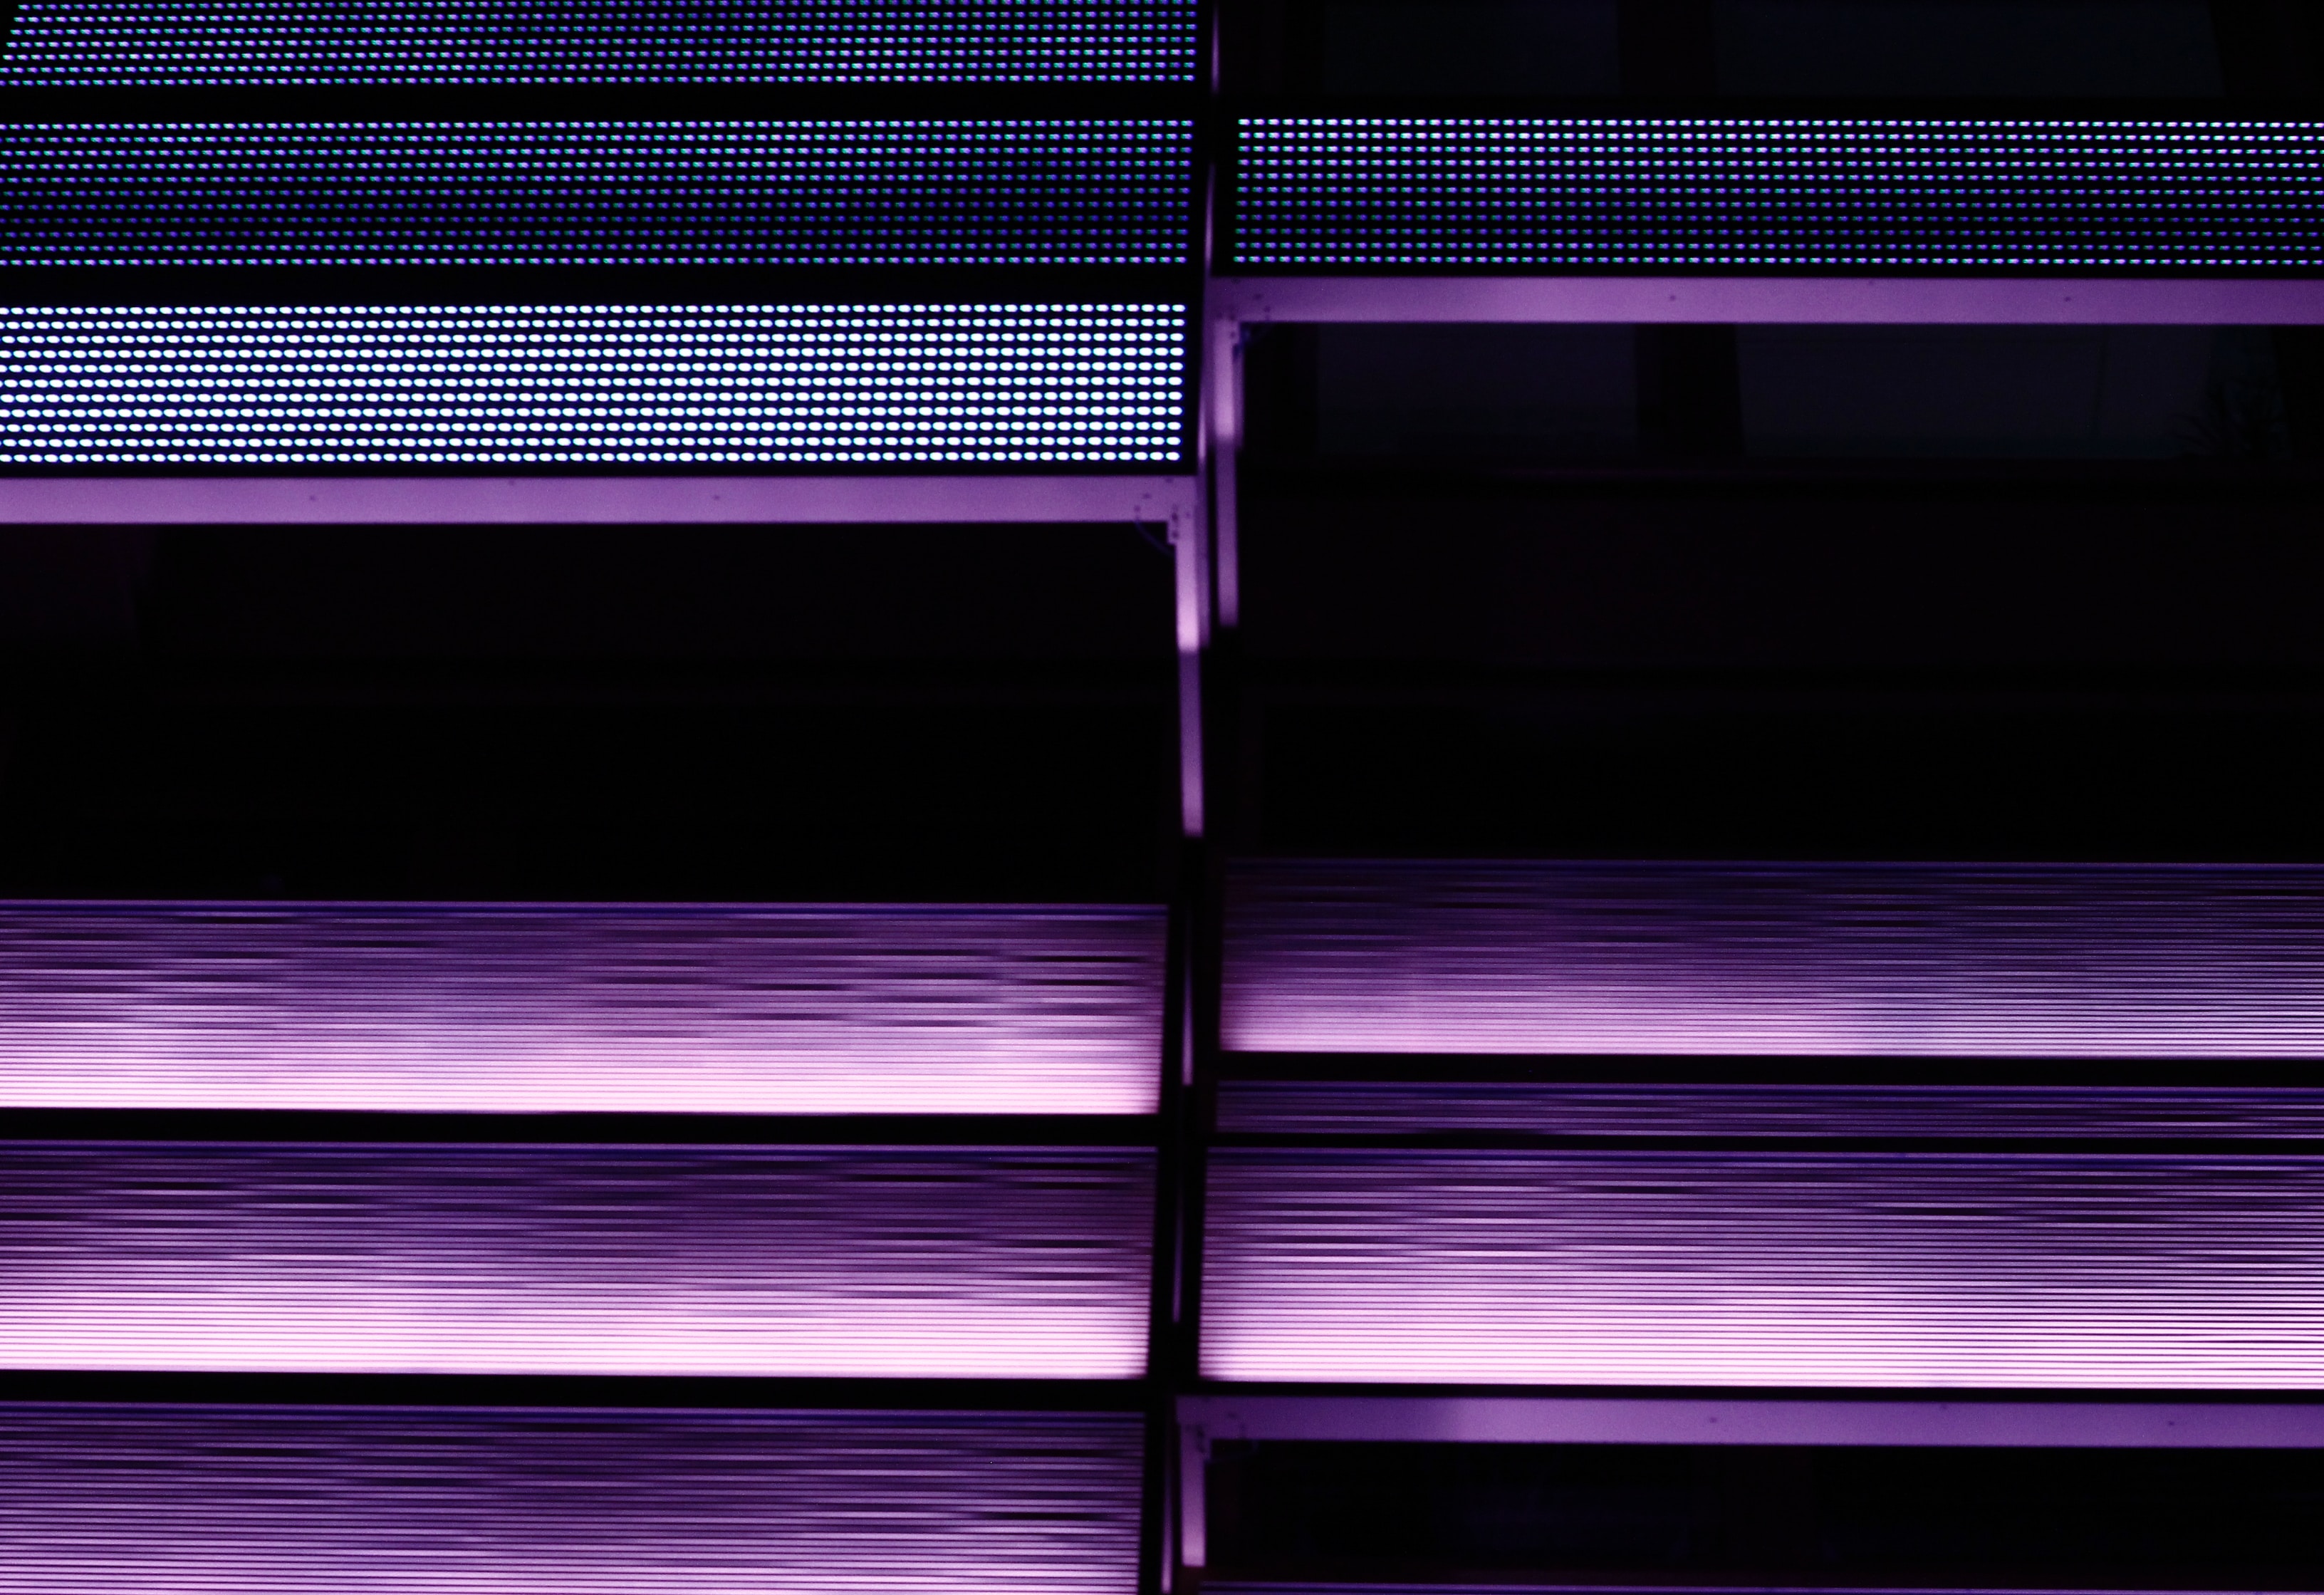 151556 descargar imagen violeta, textura, texturas, neón, iluminar desde el fondo, iluminación, púrpura, pasos: fondos de pantalla y protectores de pantalla gratis